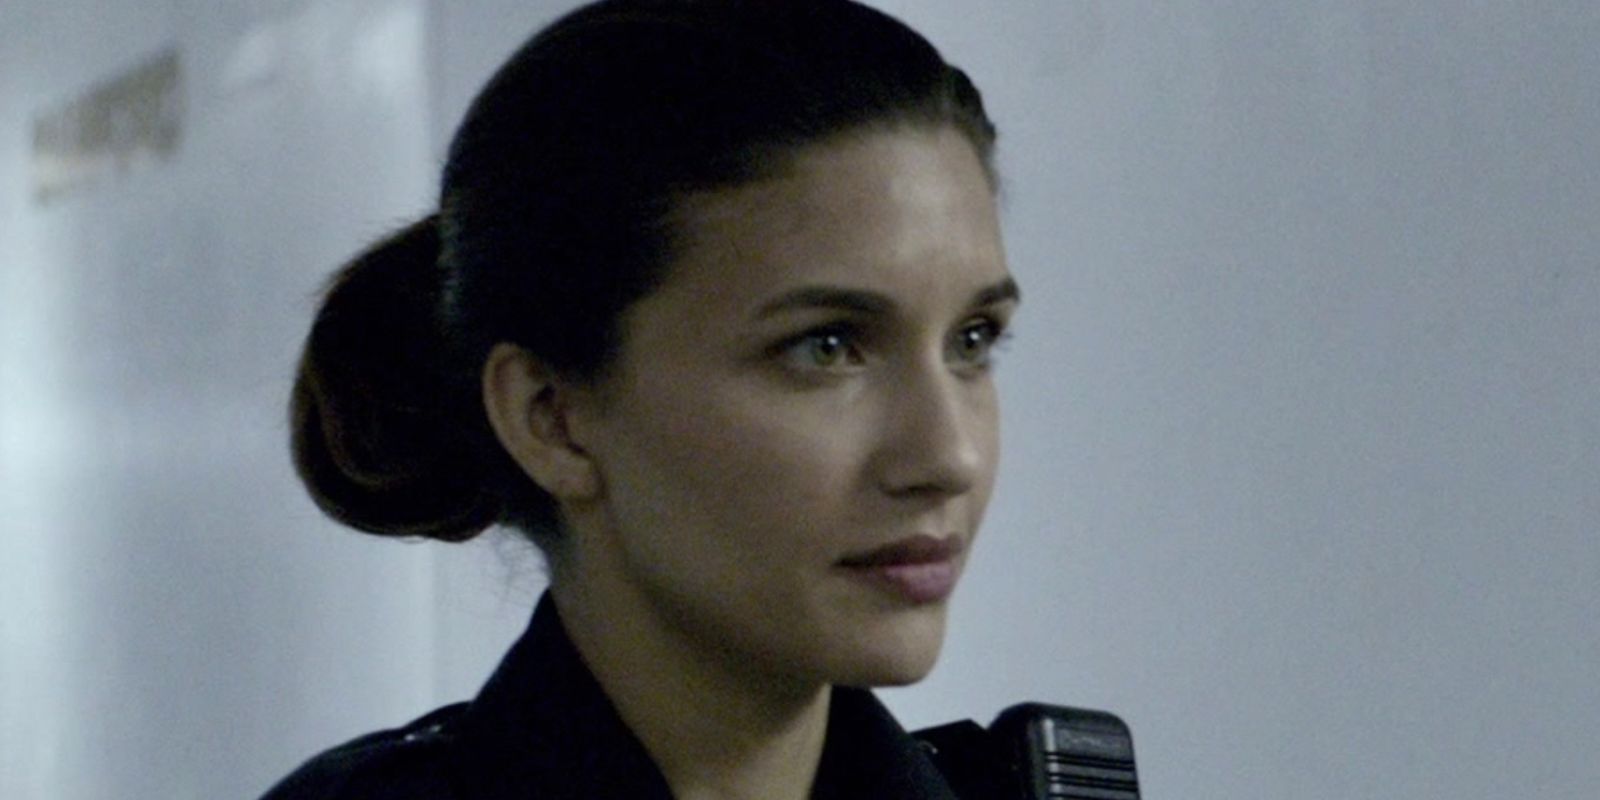 Juliana Harkavy as a police officer in Last Shift